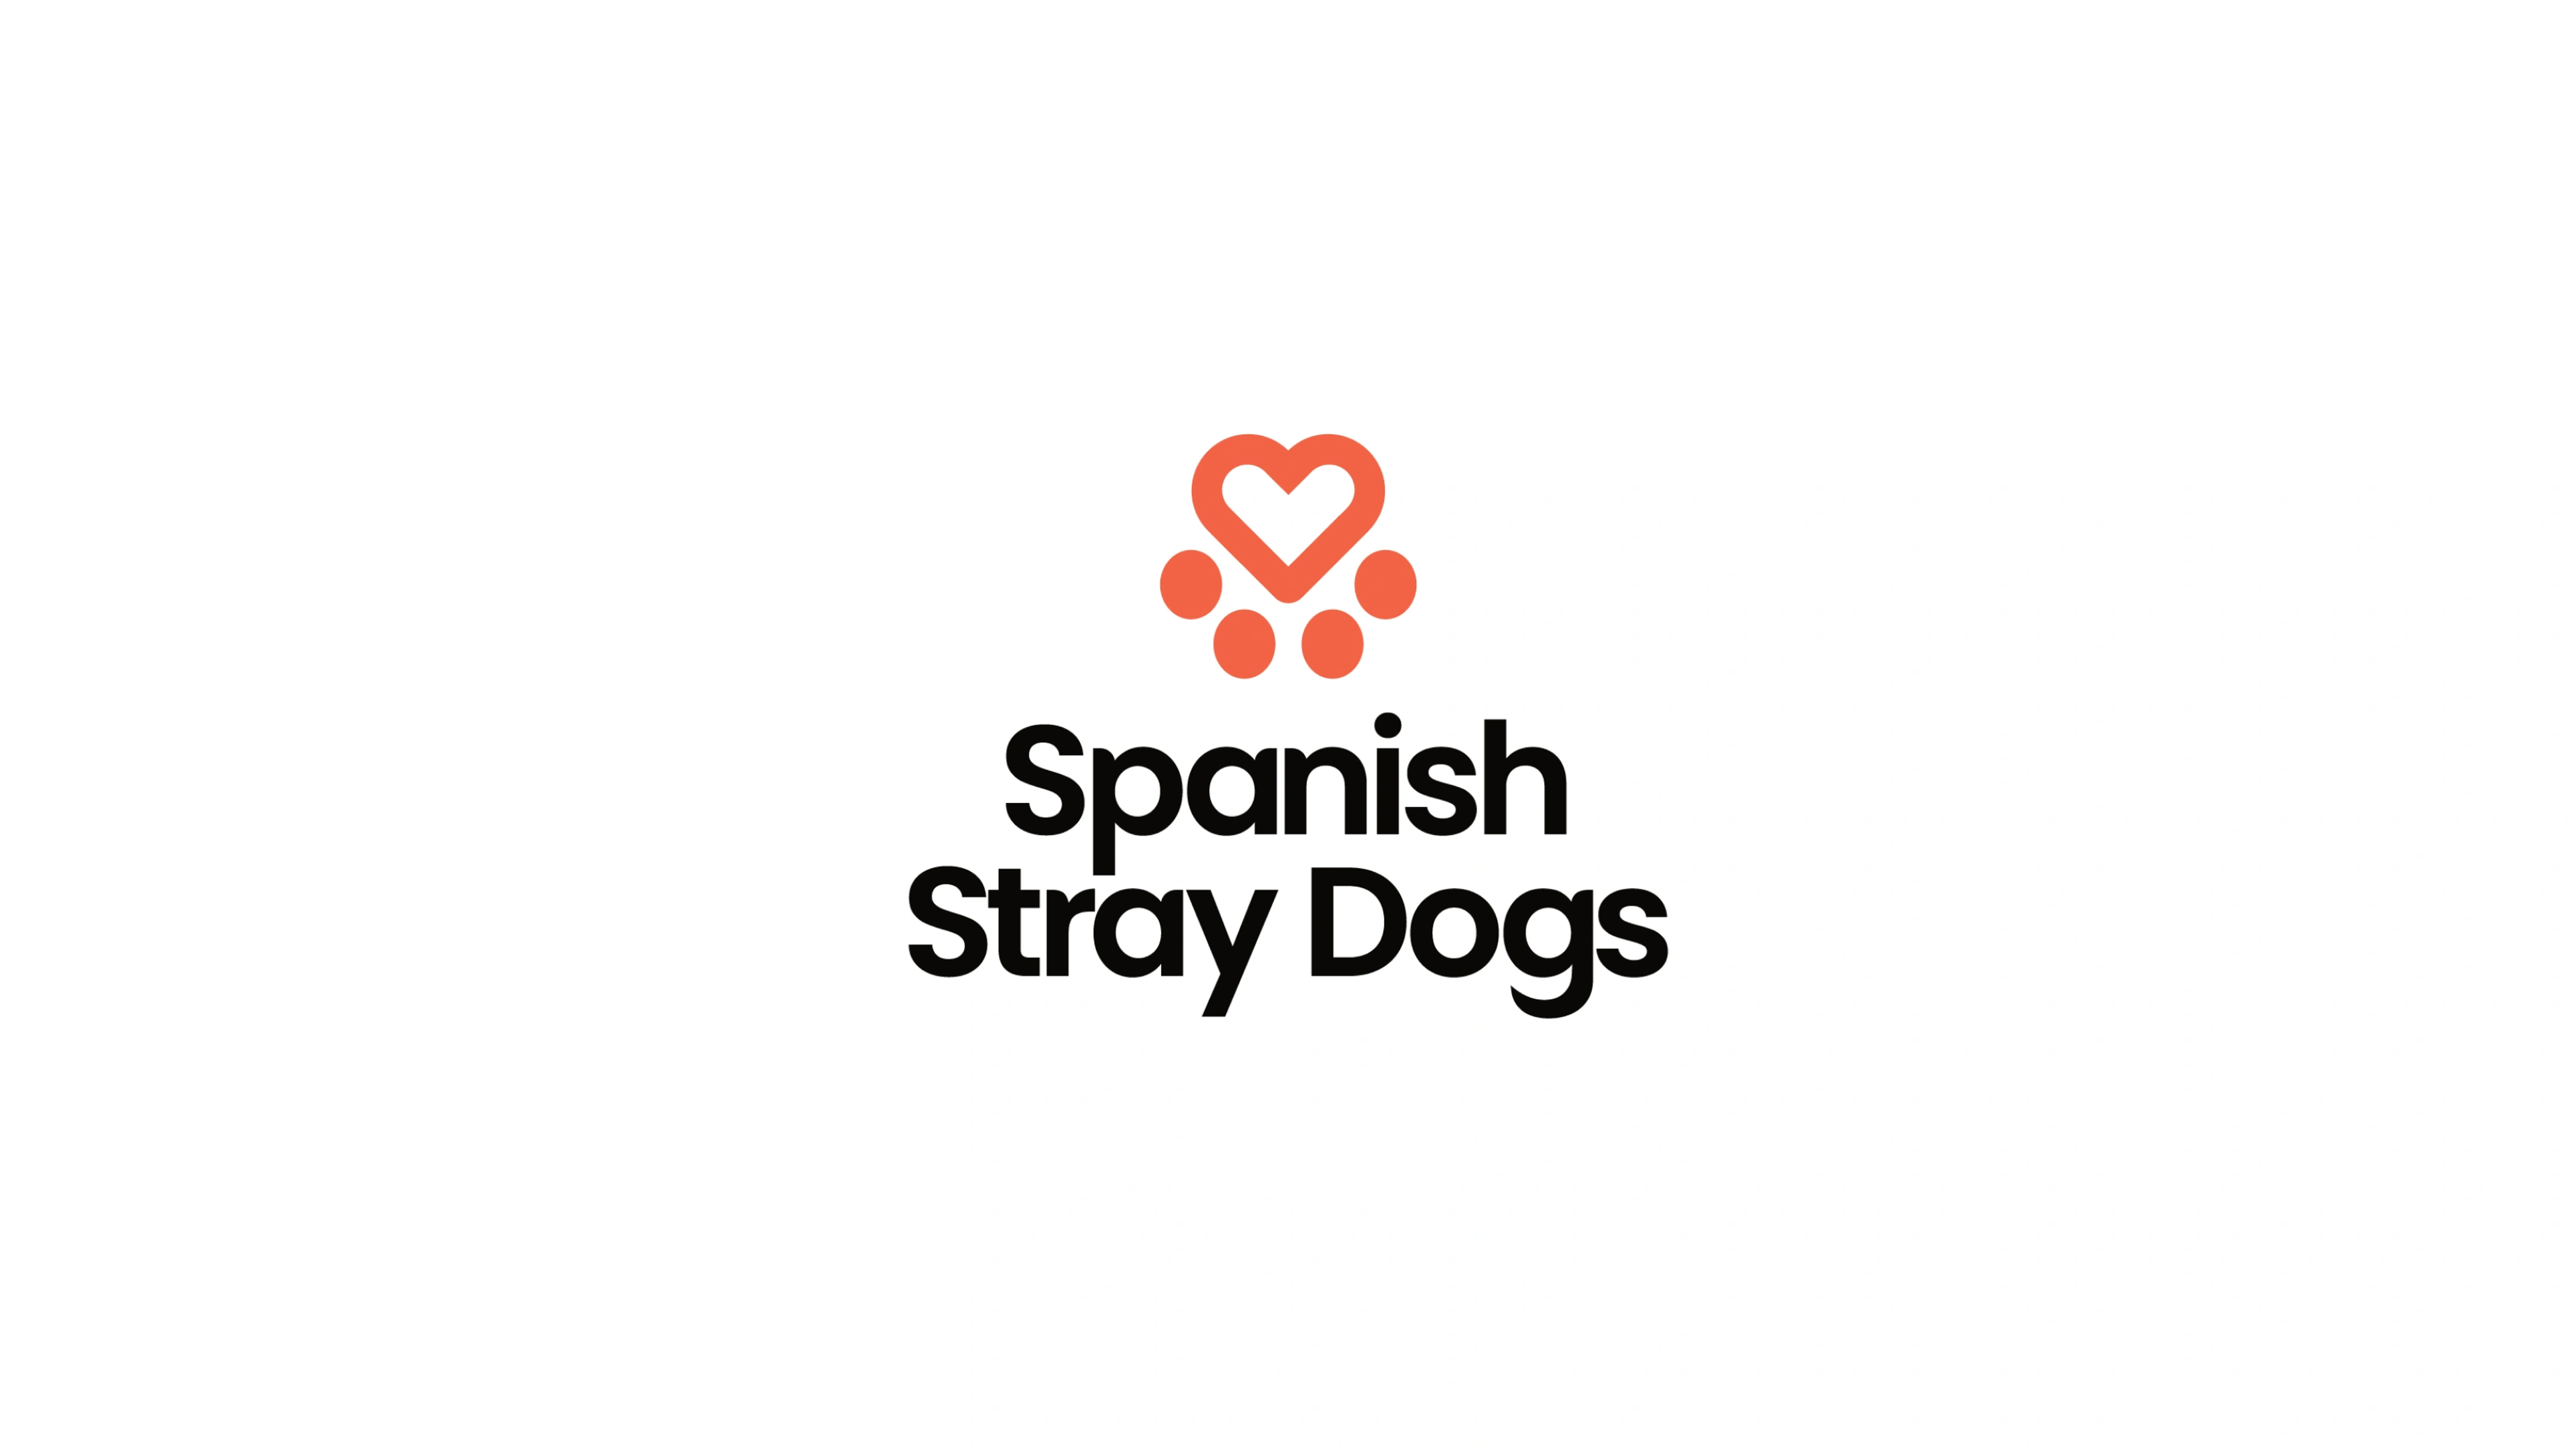 Spanish Stray Dogs visual identity